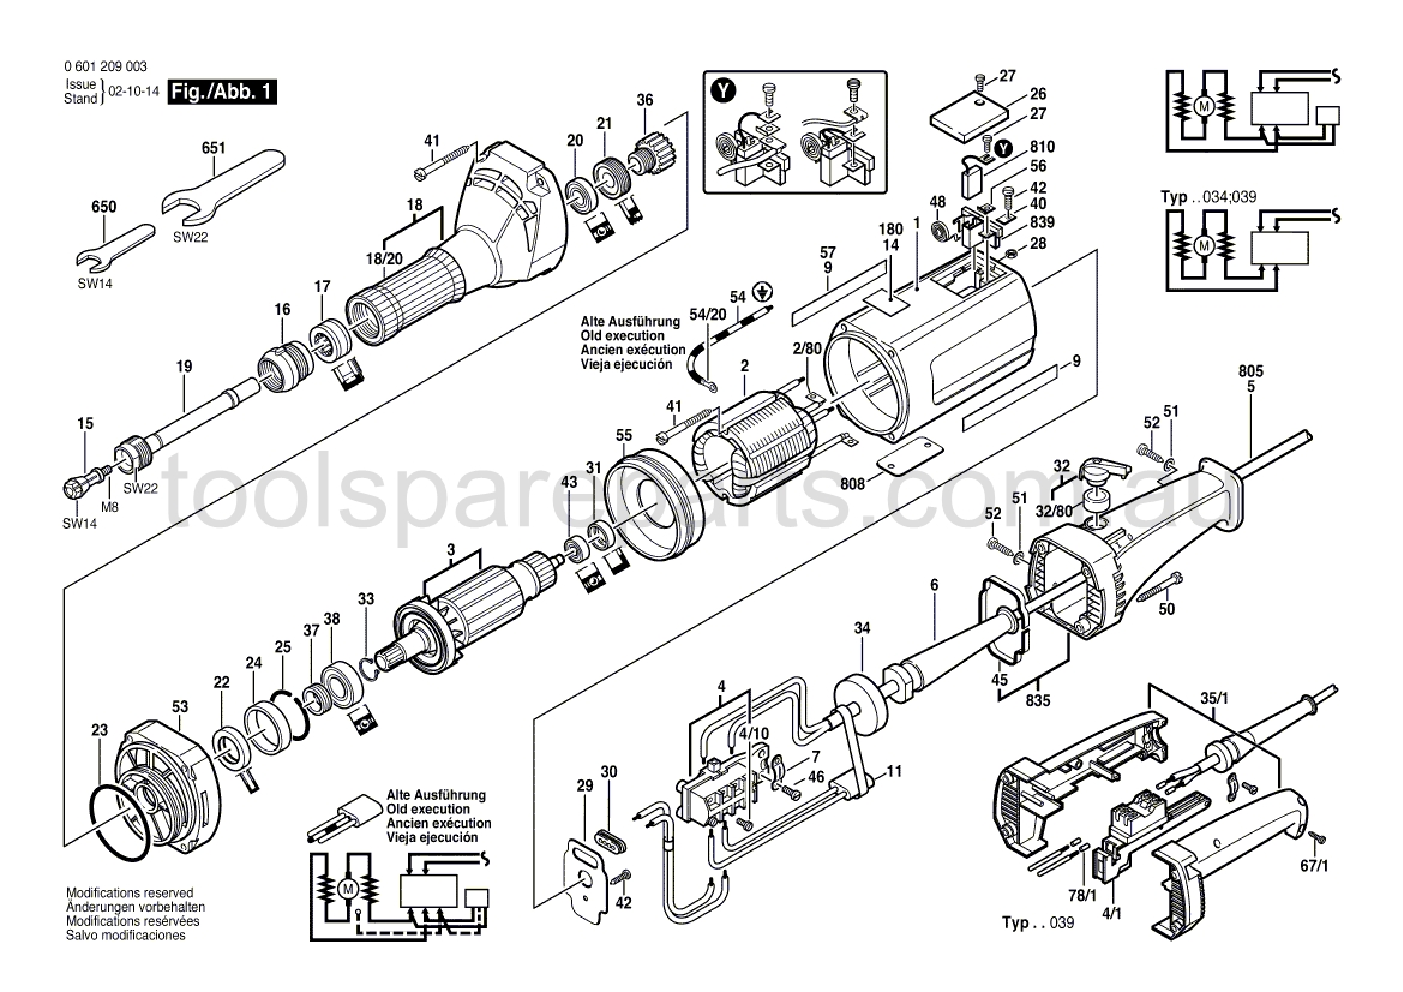 Bosch ---- 0601209037  Diagram 1